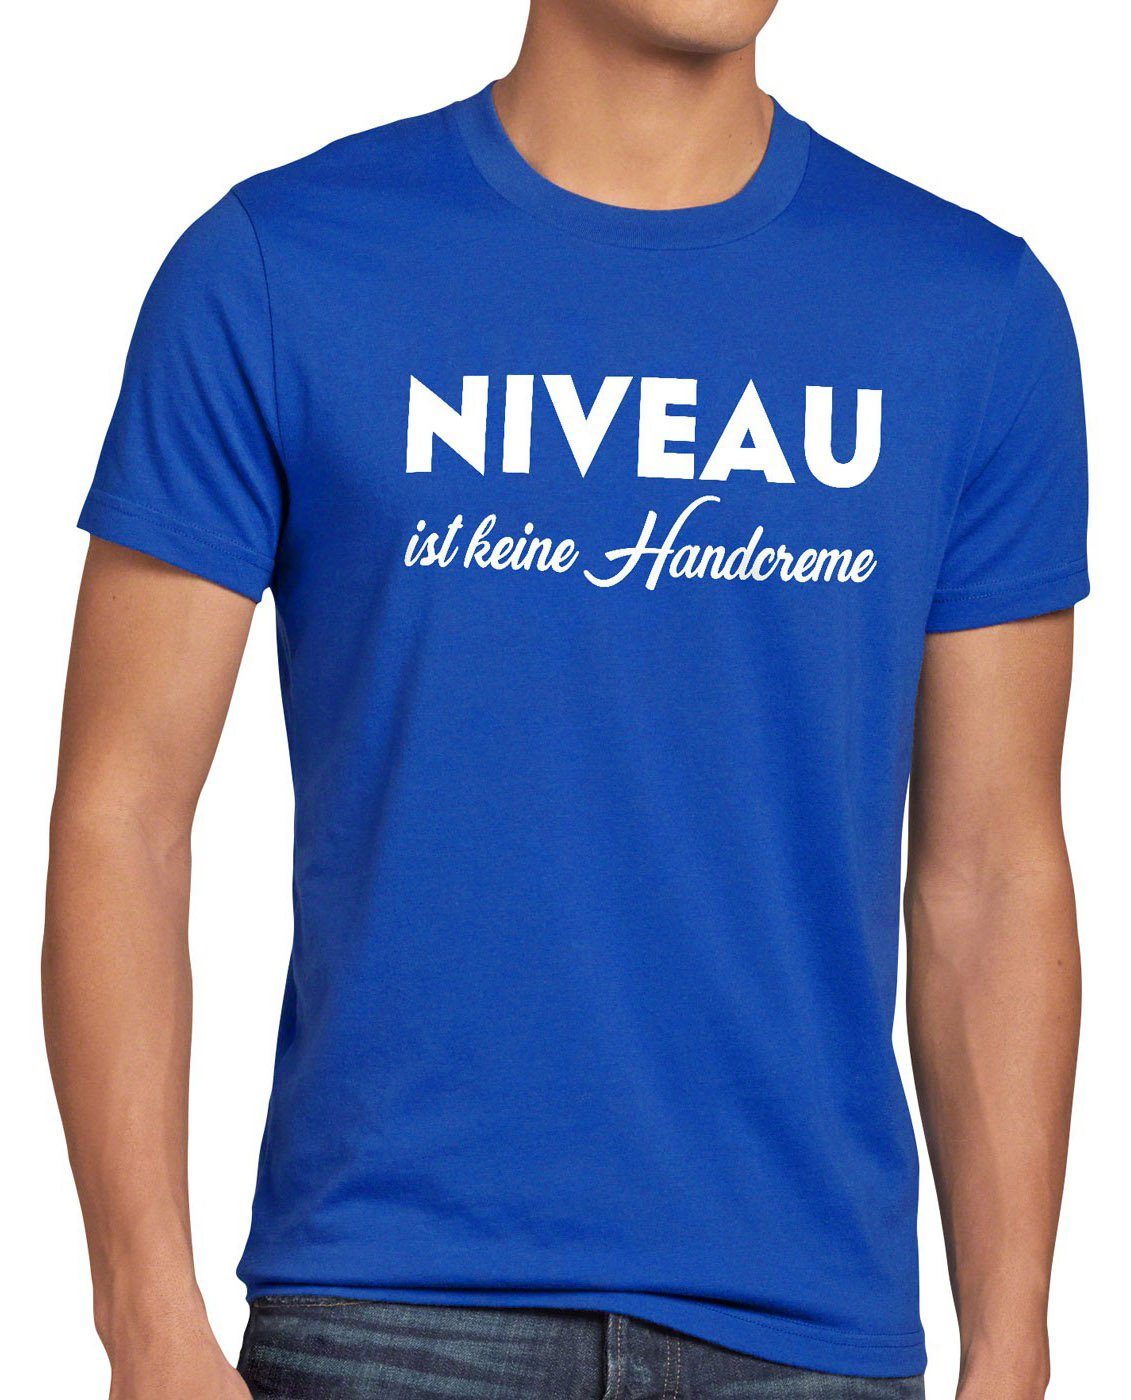 style3 Print-Shirt Herren T-Shirt ist Funshirt lustig Creme keine Niveau nivea Spruch blau Handcreme fun